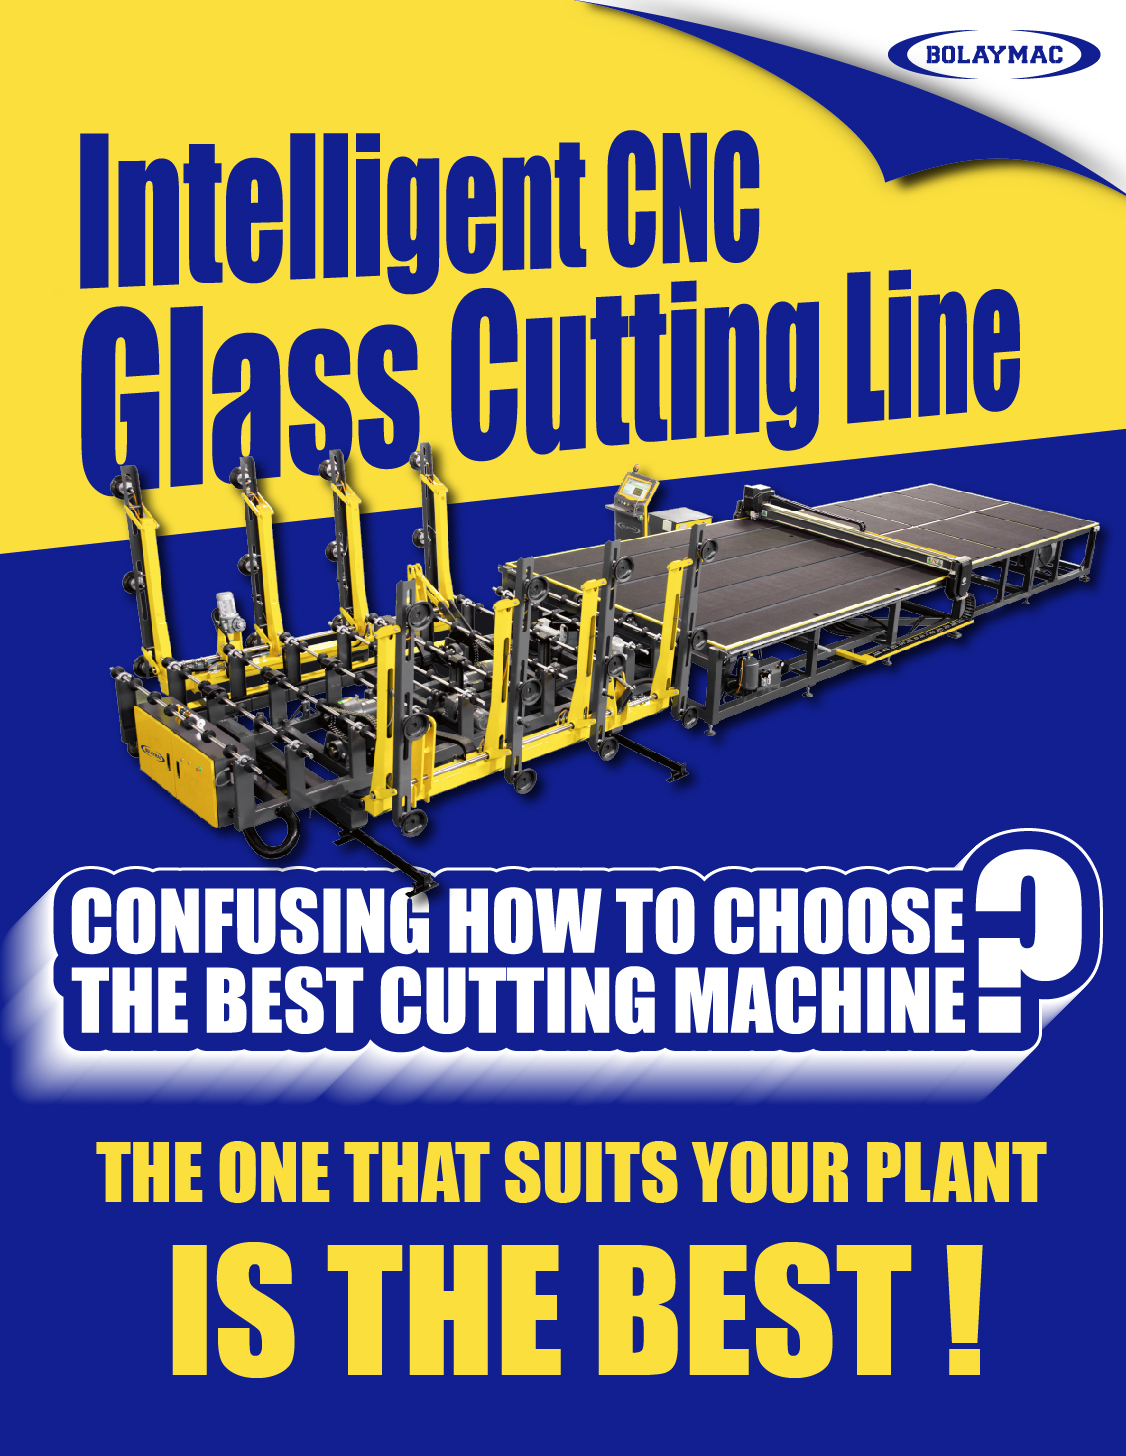 CNC glass cutting line